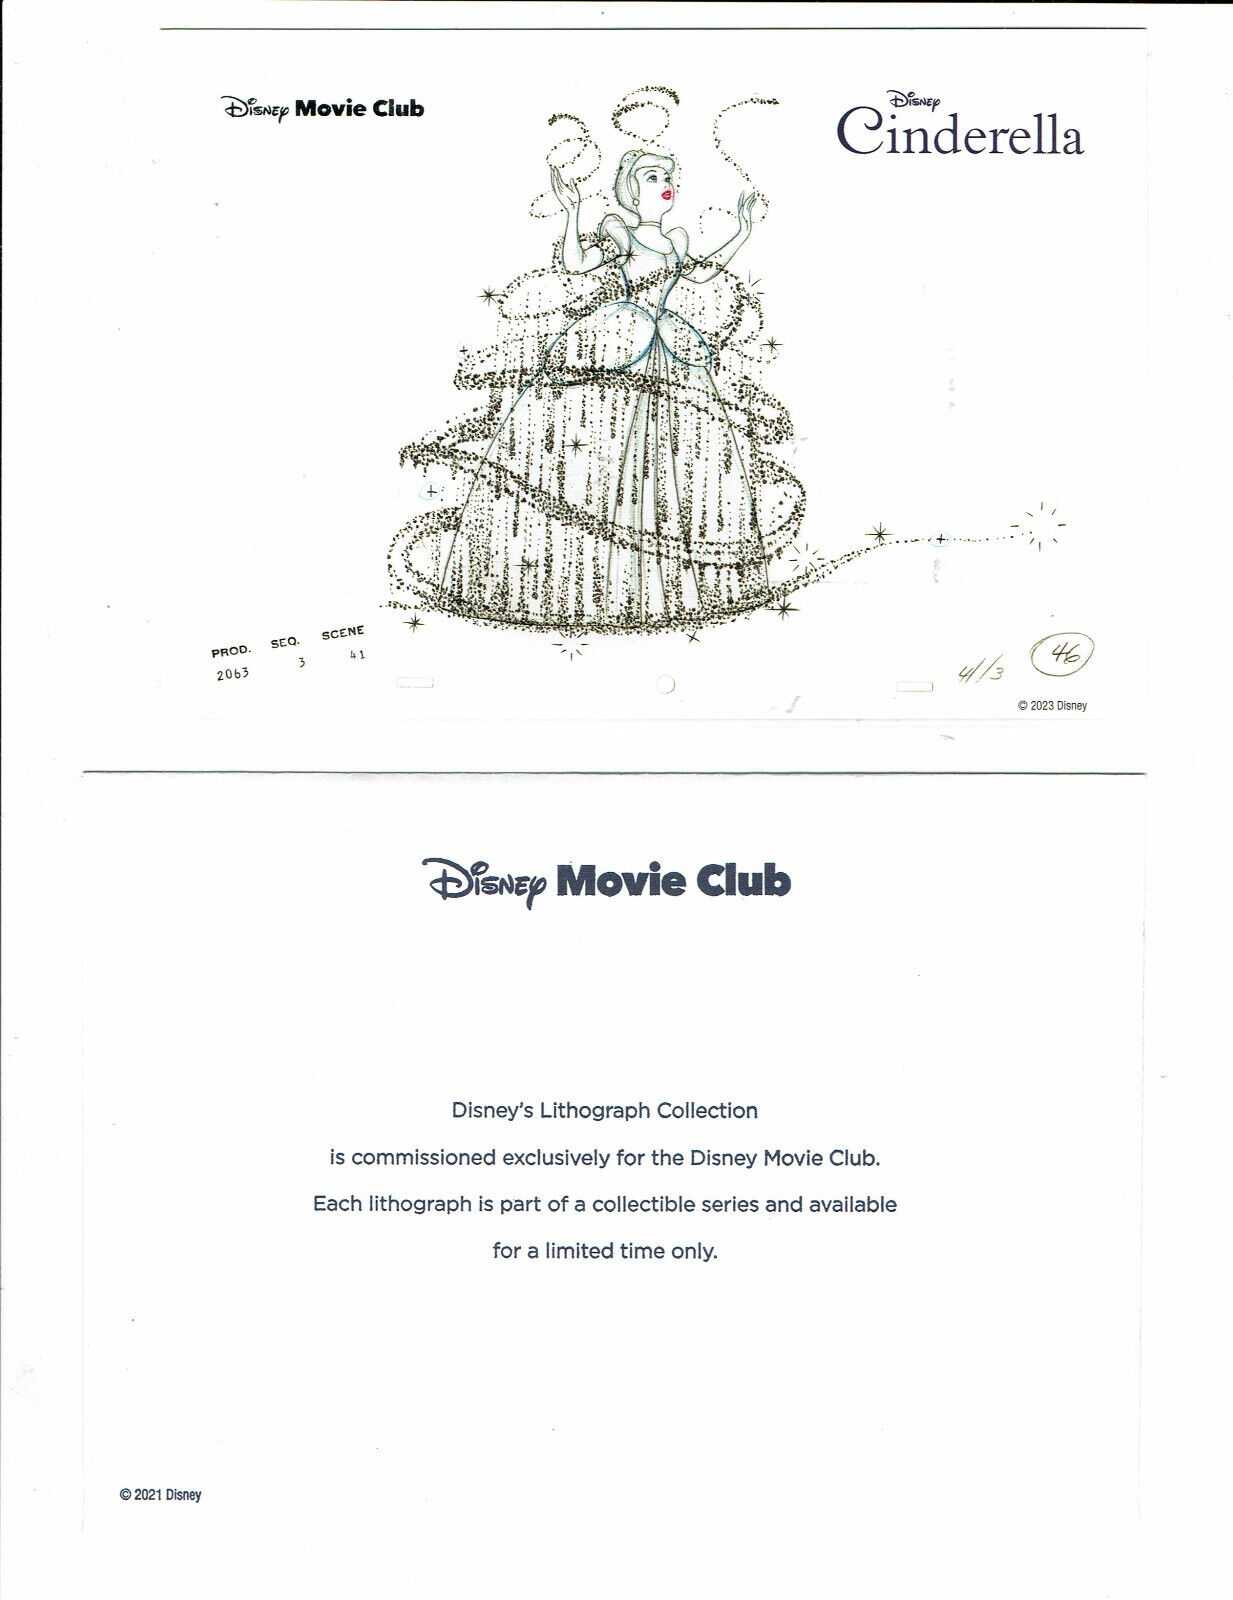 Cinderella 1950 Disney Movie Club lithograph